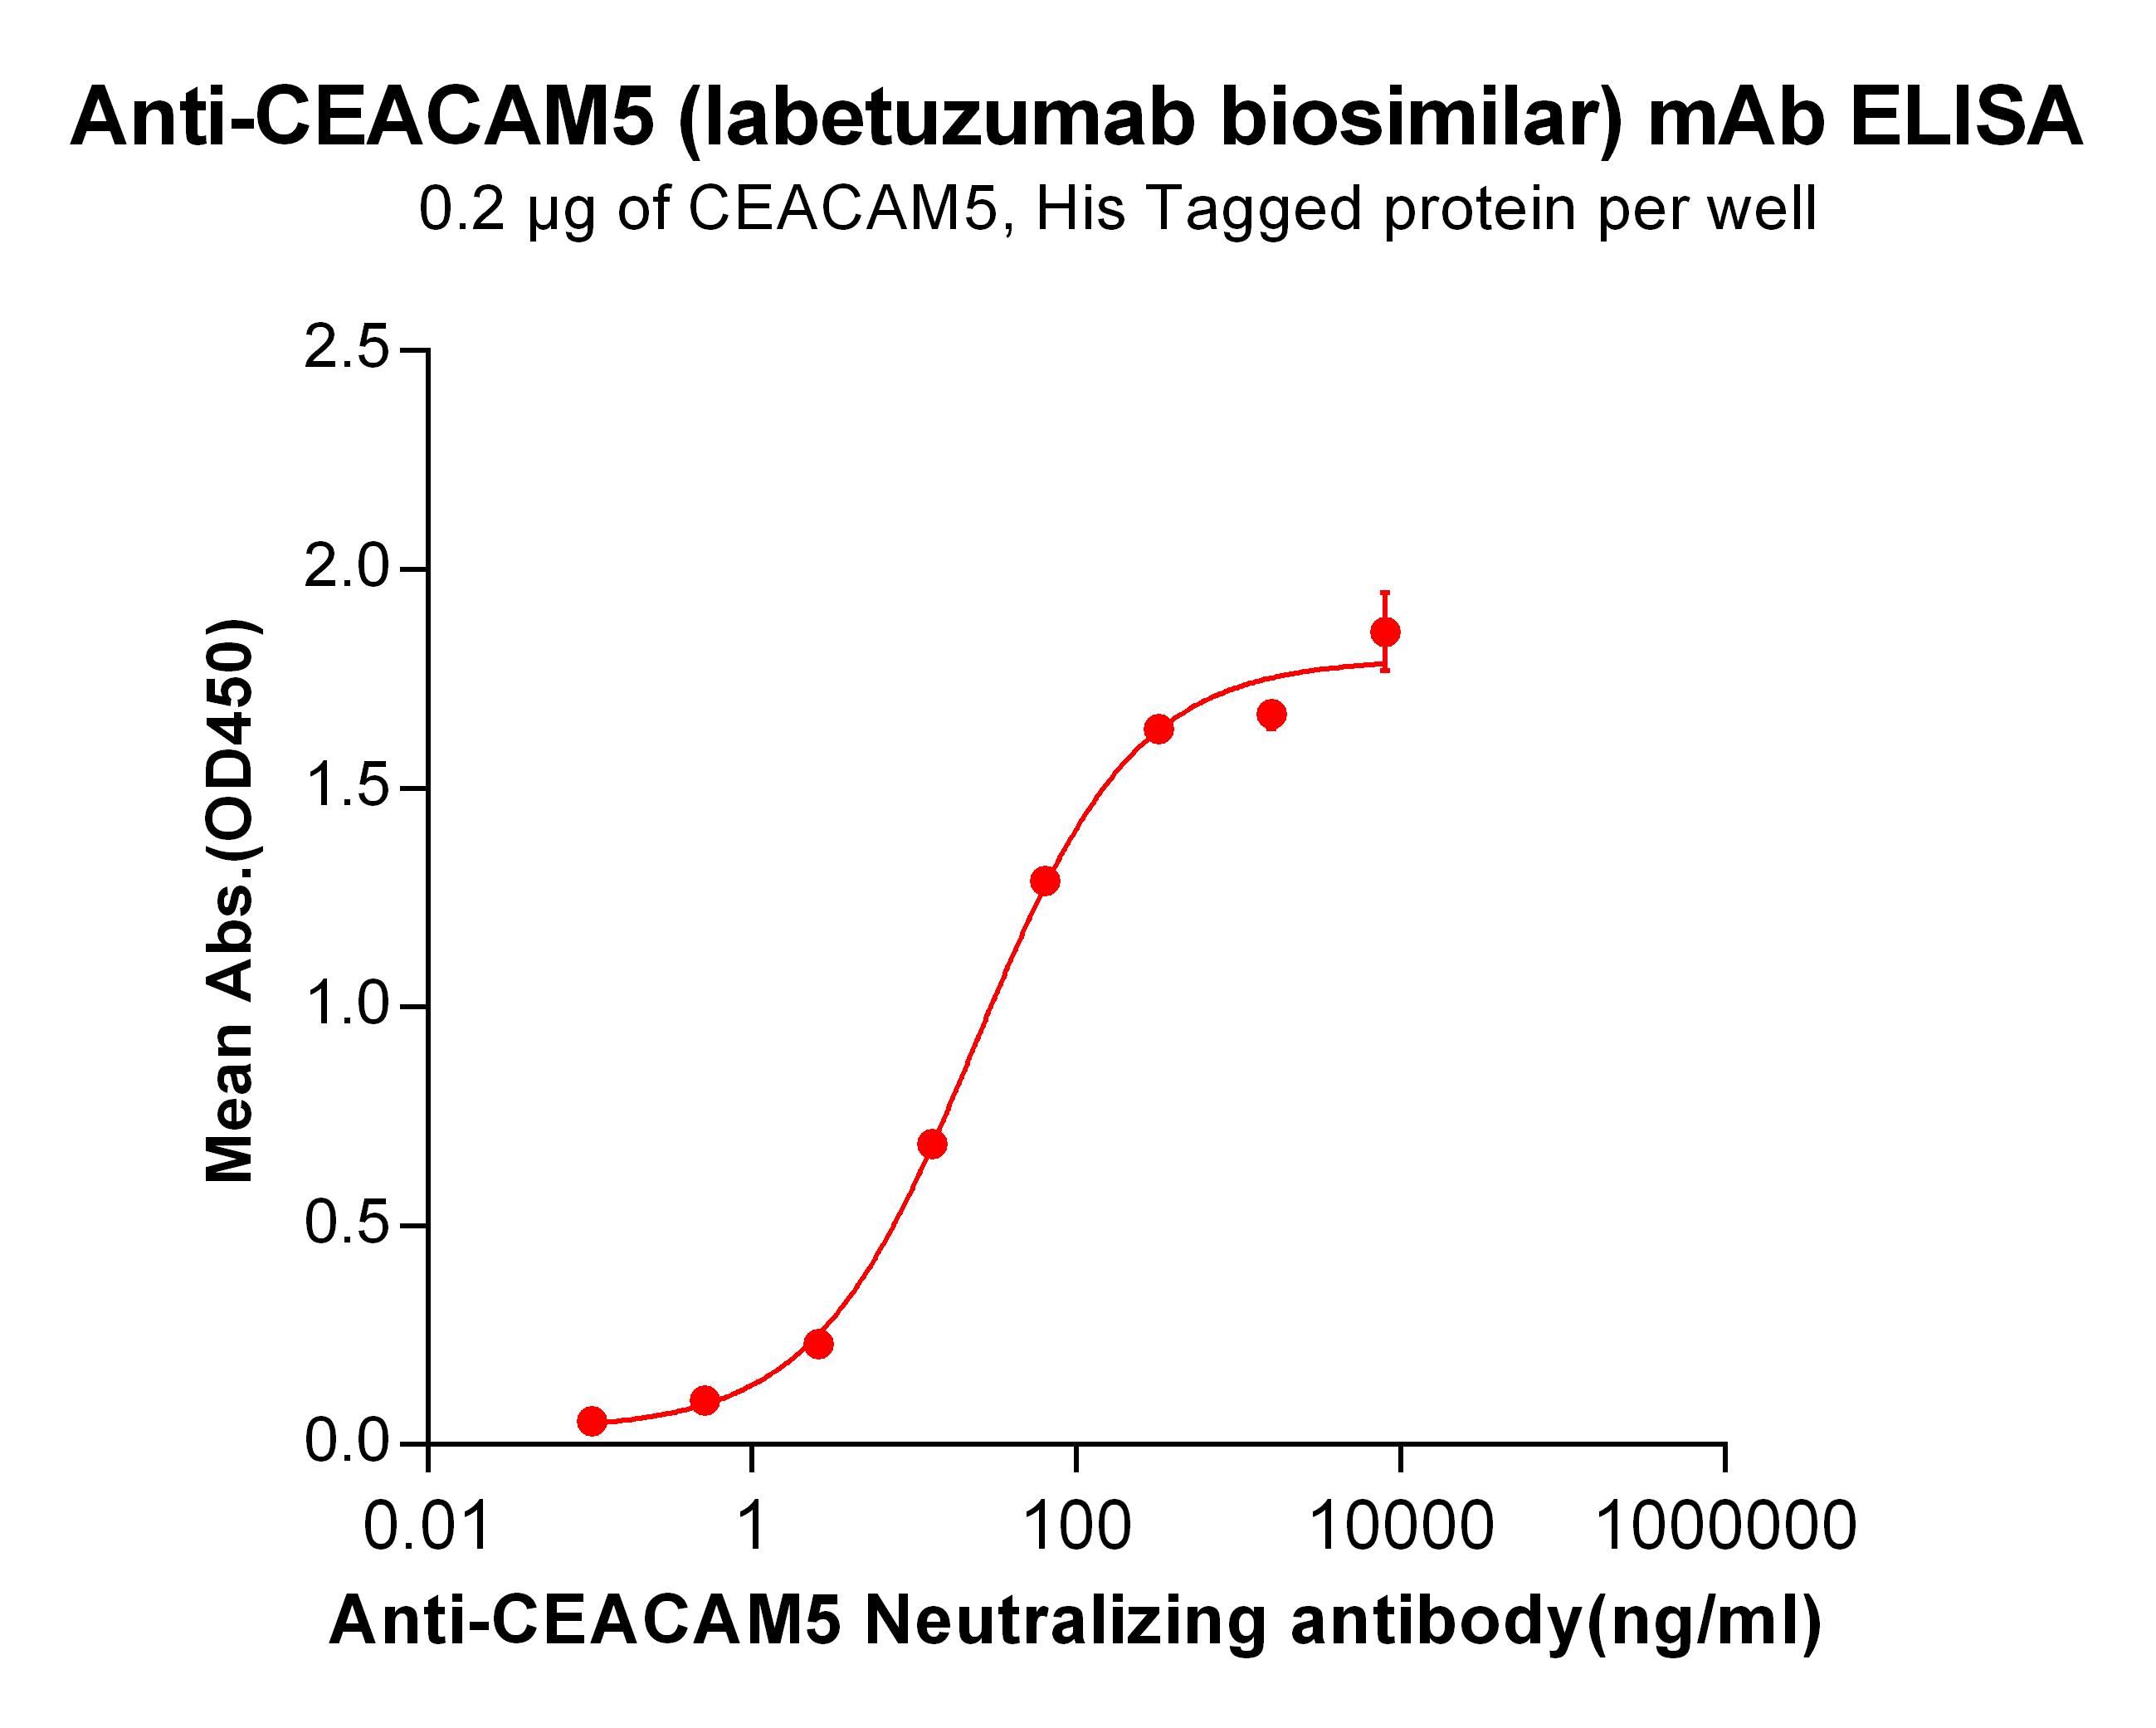 BME100035-Anti-CEACAM5-labetuzumab-biosimilar-mAb-Elisa-fig1.png